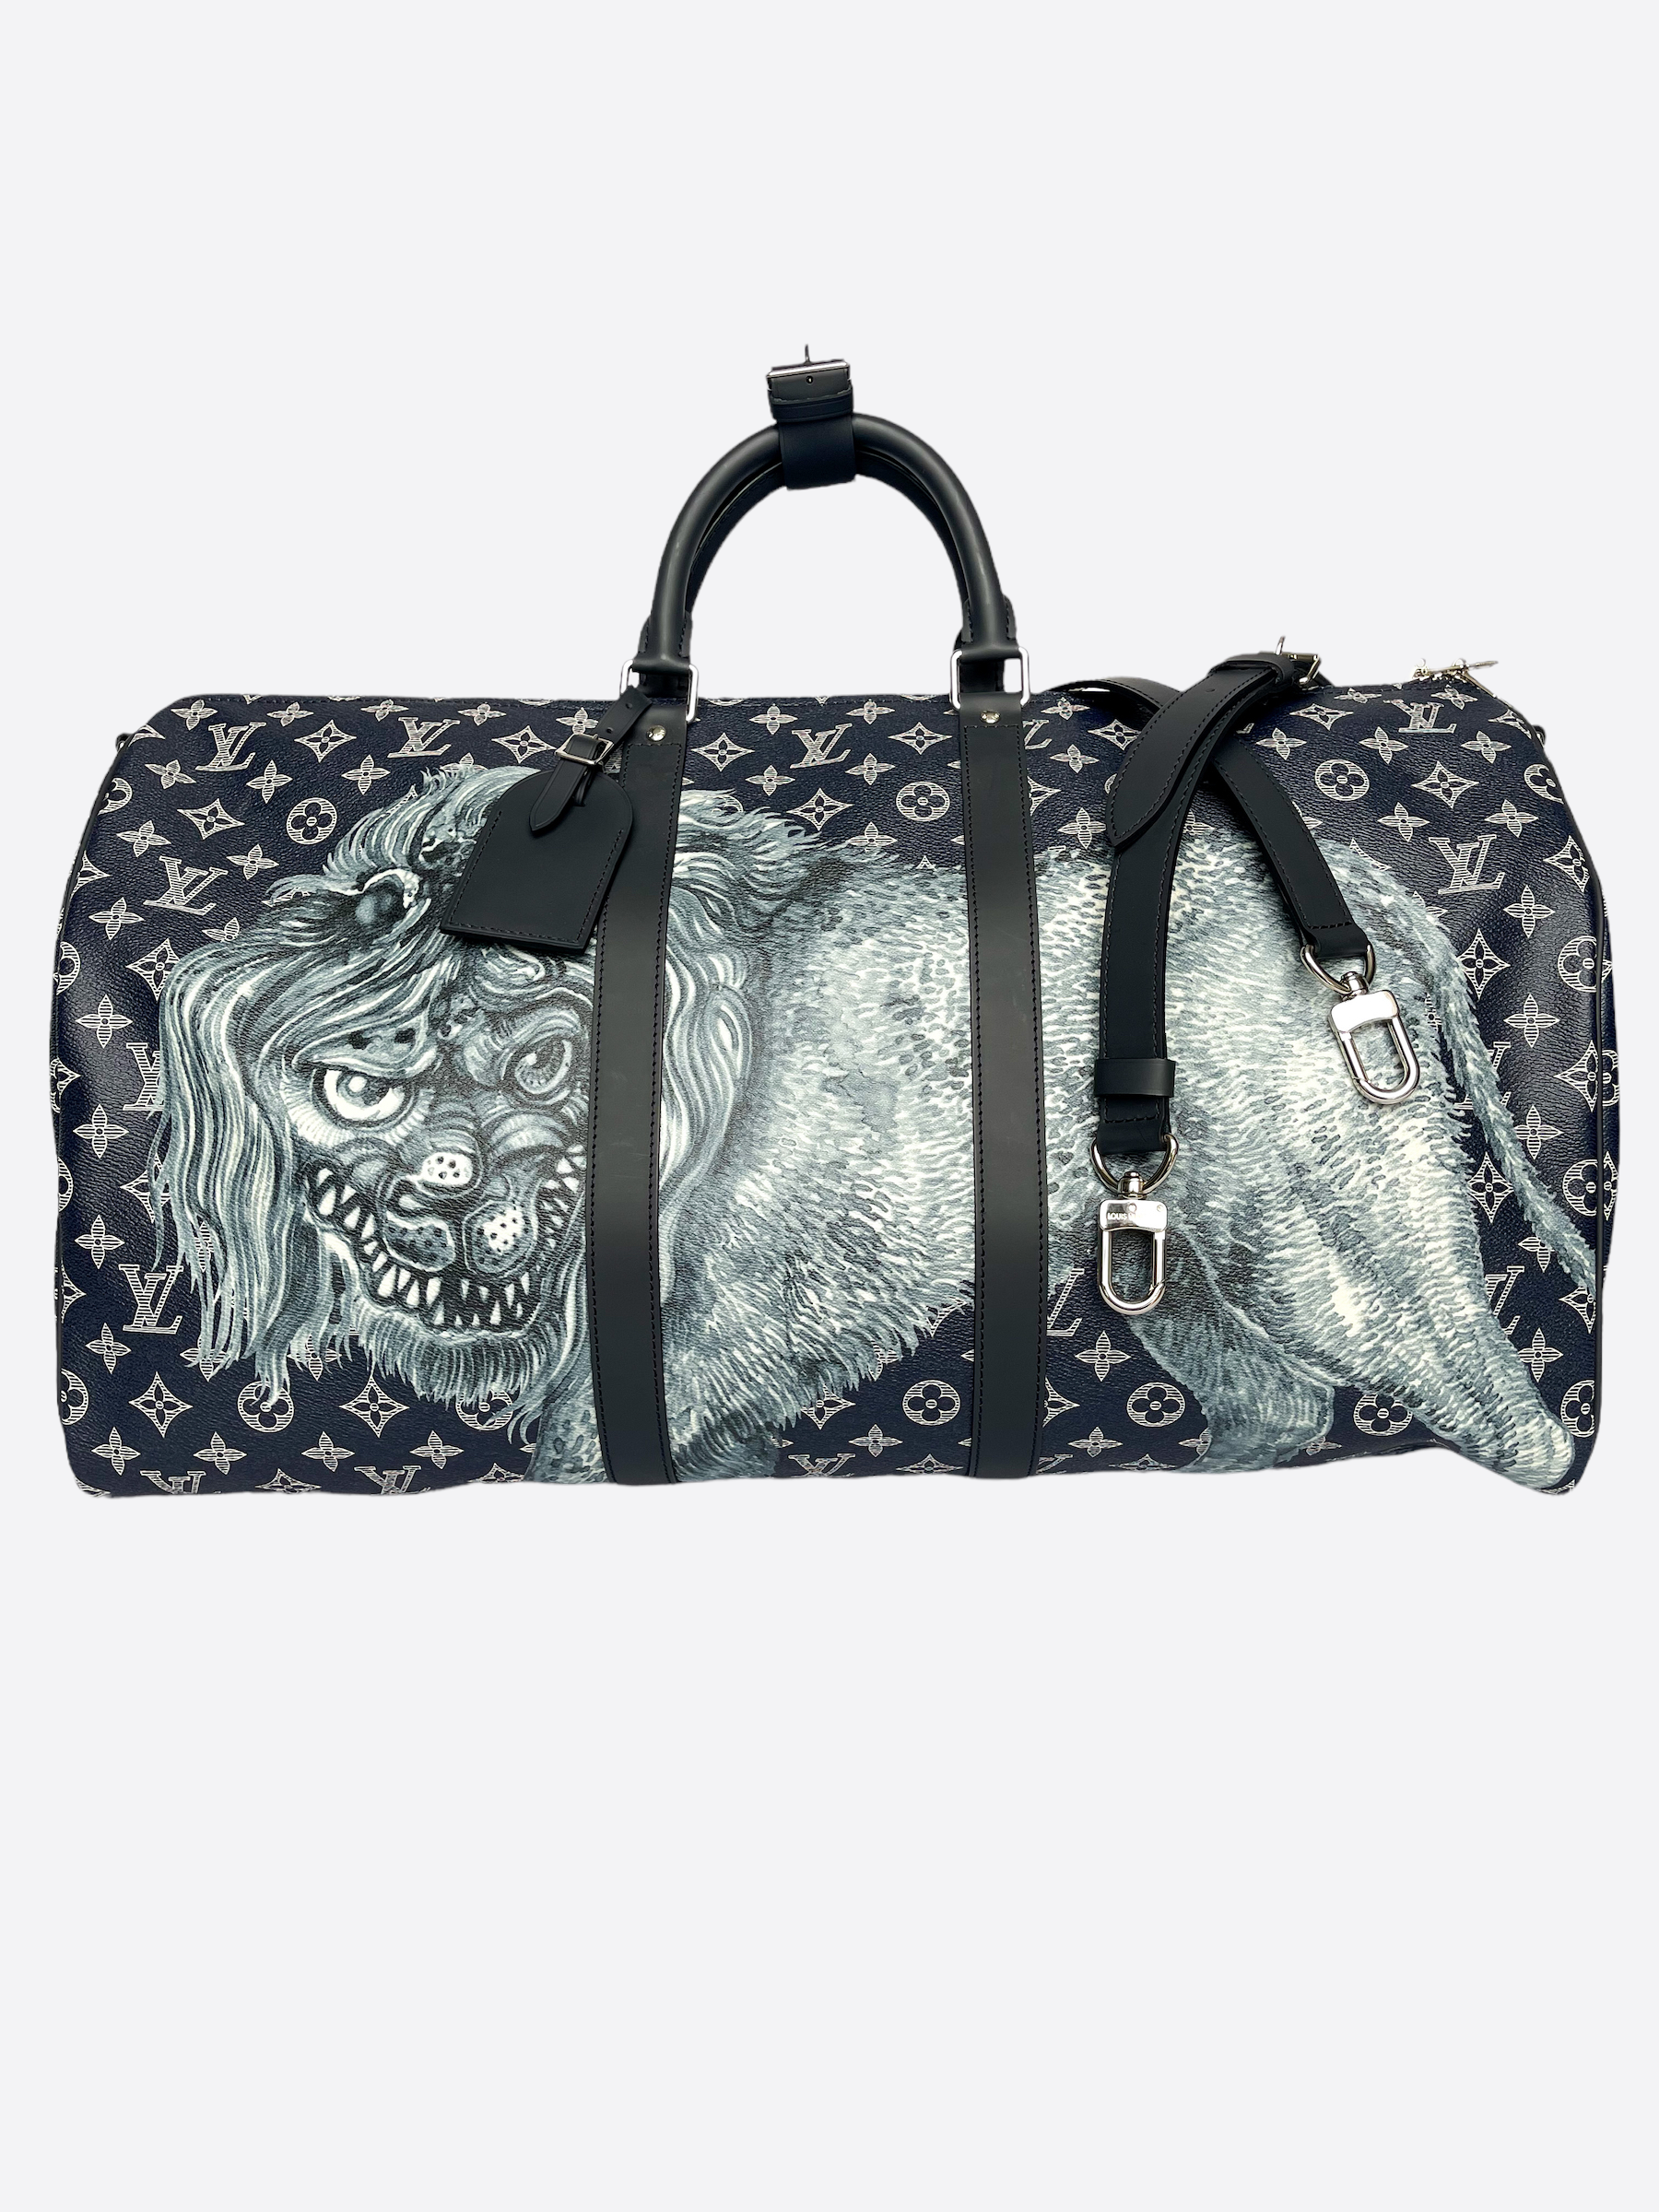 Chapman Louis Vuitton Bag - 2 For Sale on 1stDibs